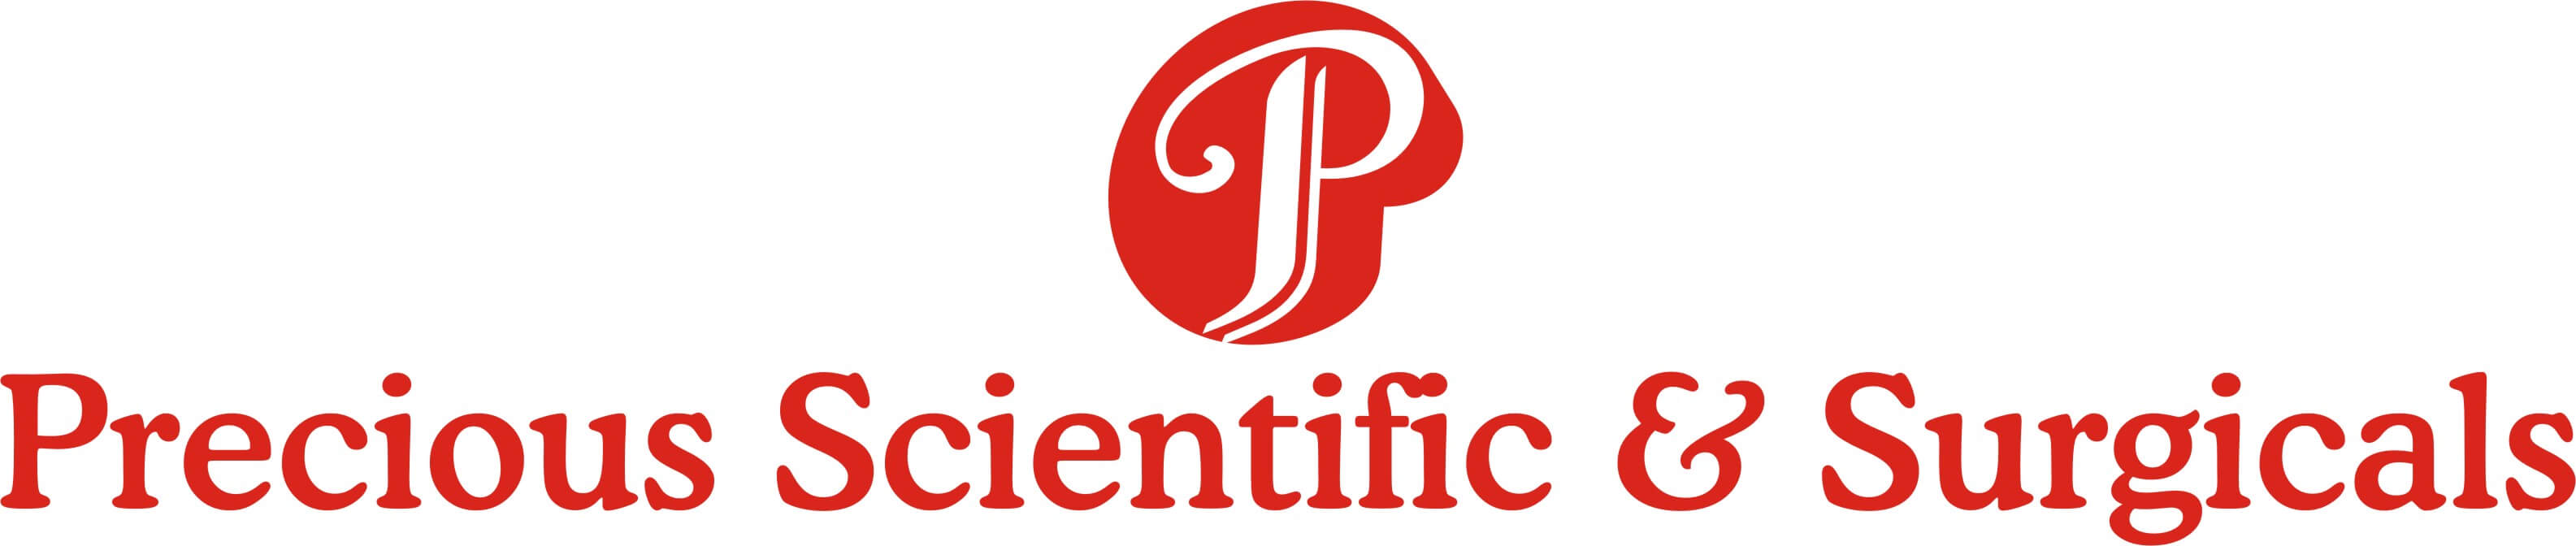 Precious Scientific & Surgicals - Logo